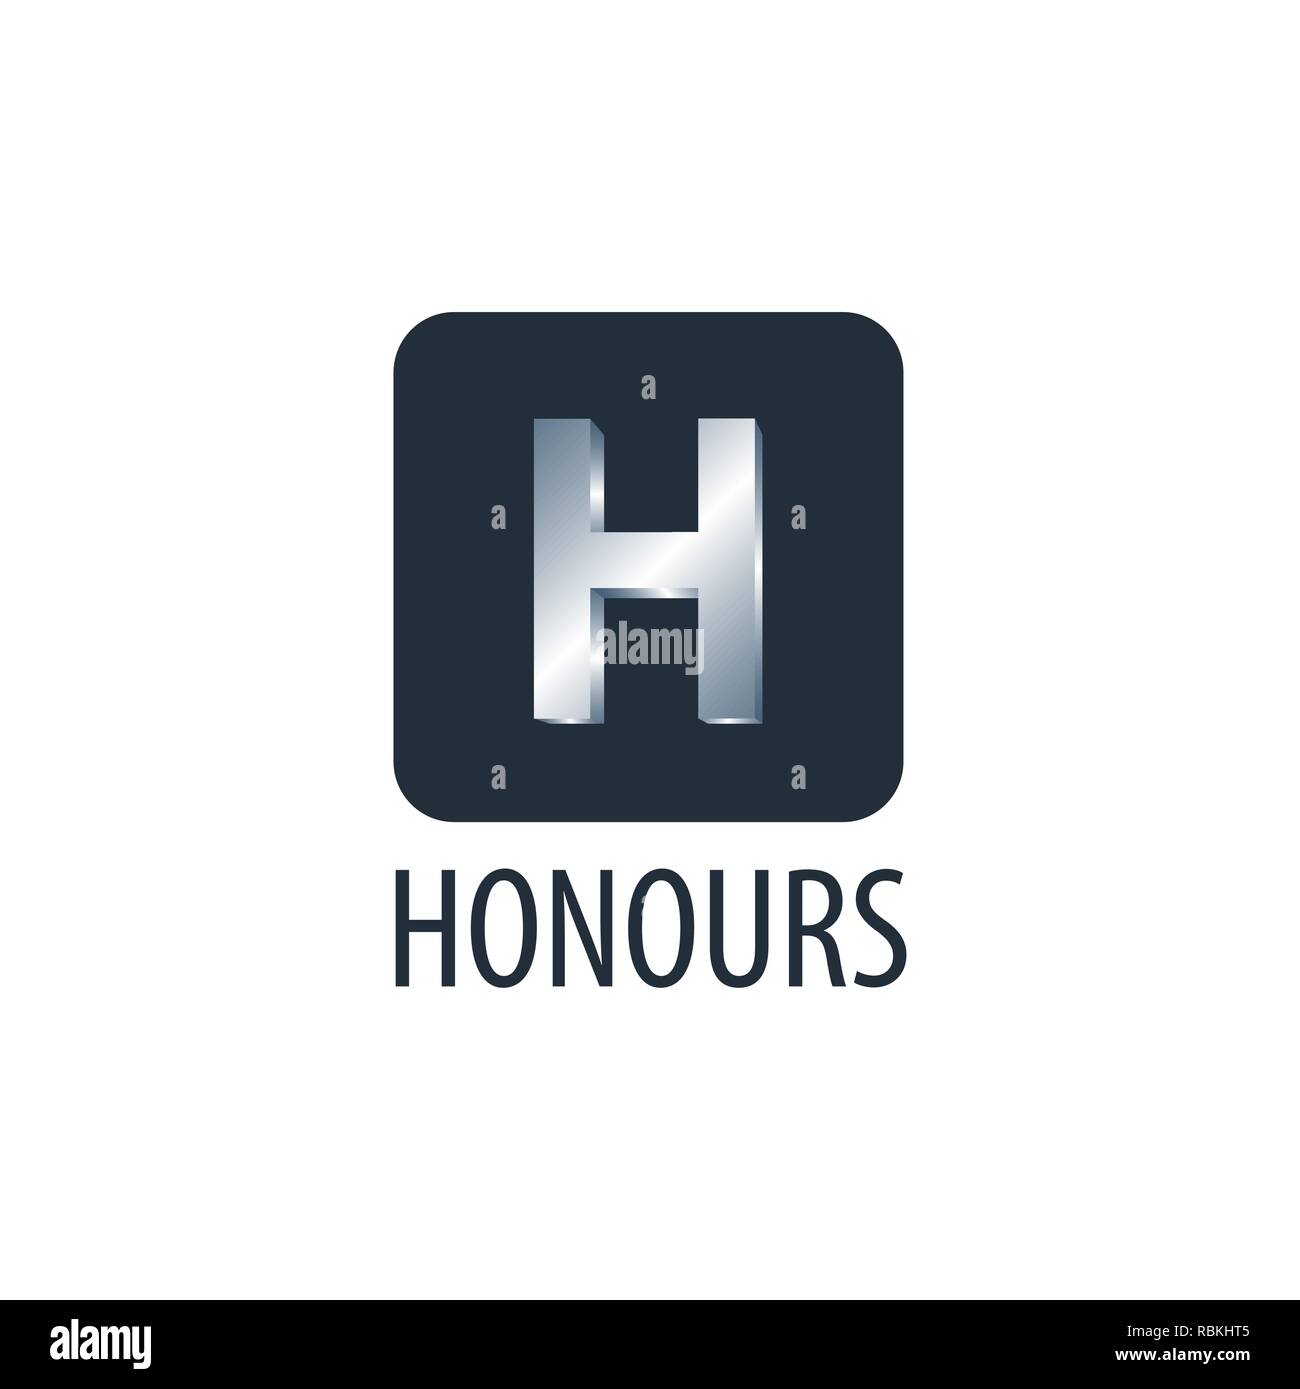 Honours. Square initial letter H logo concept design template idea Stock Vector